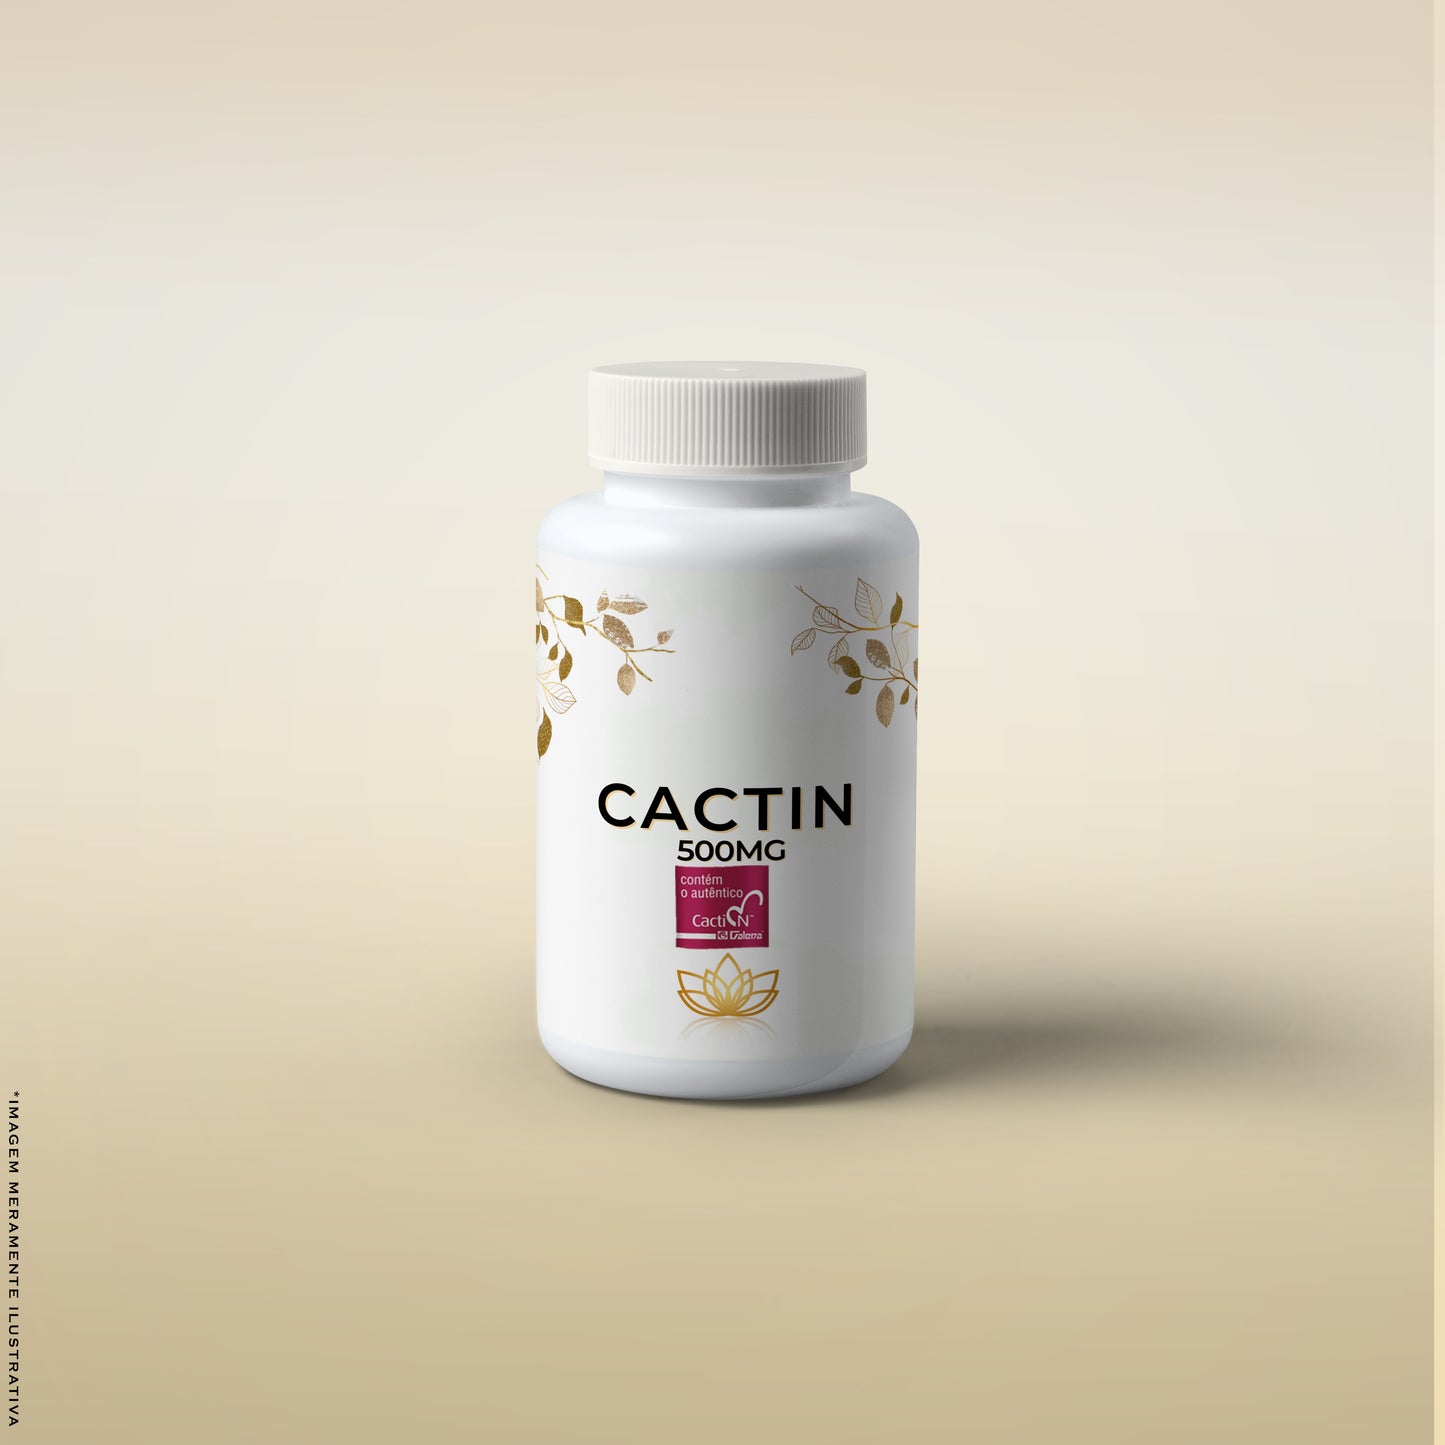 Cactin 500mg